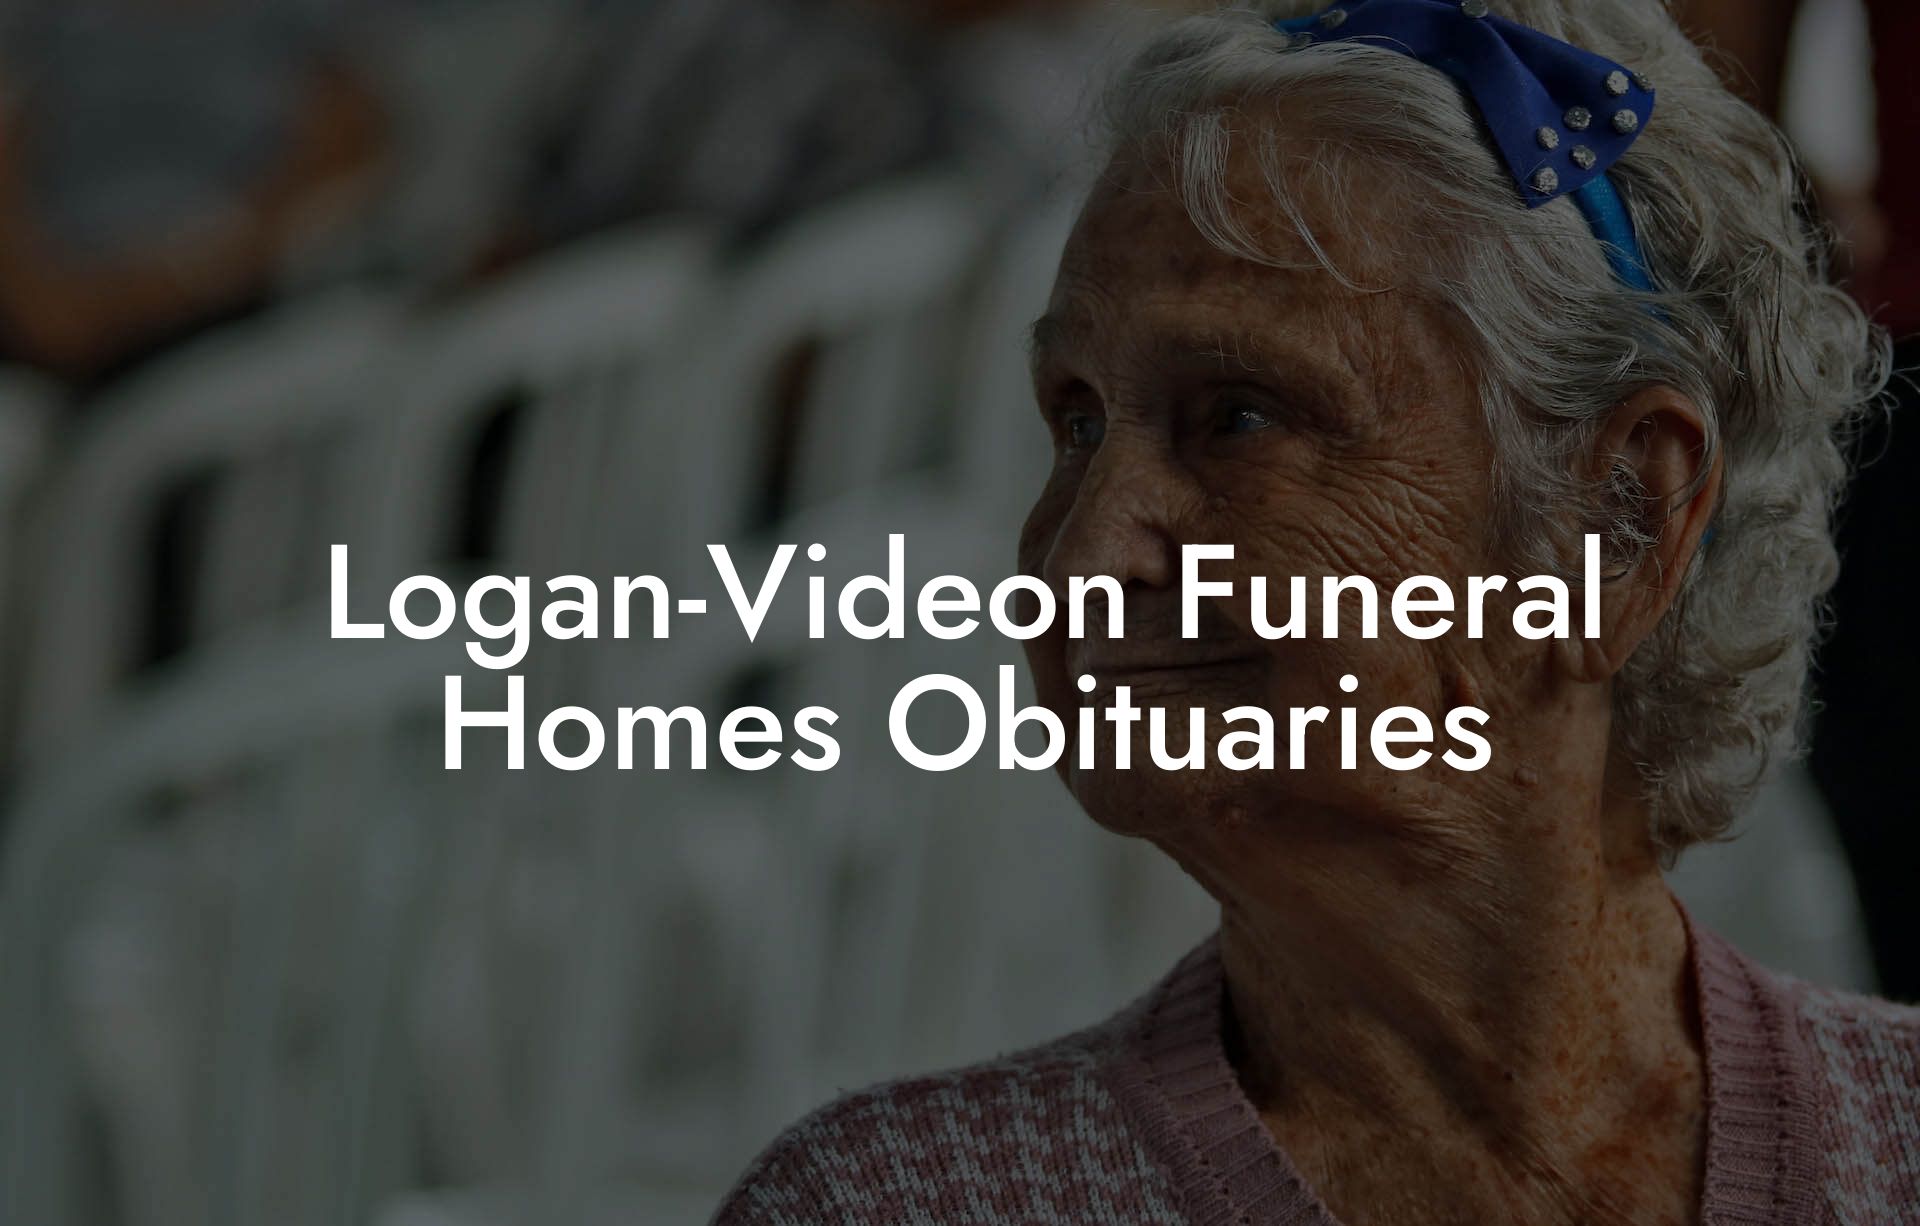 Logan-Videon Funeral Homes Obituaries